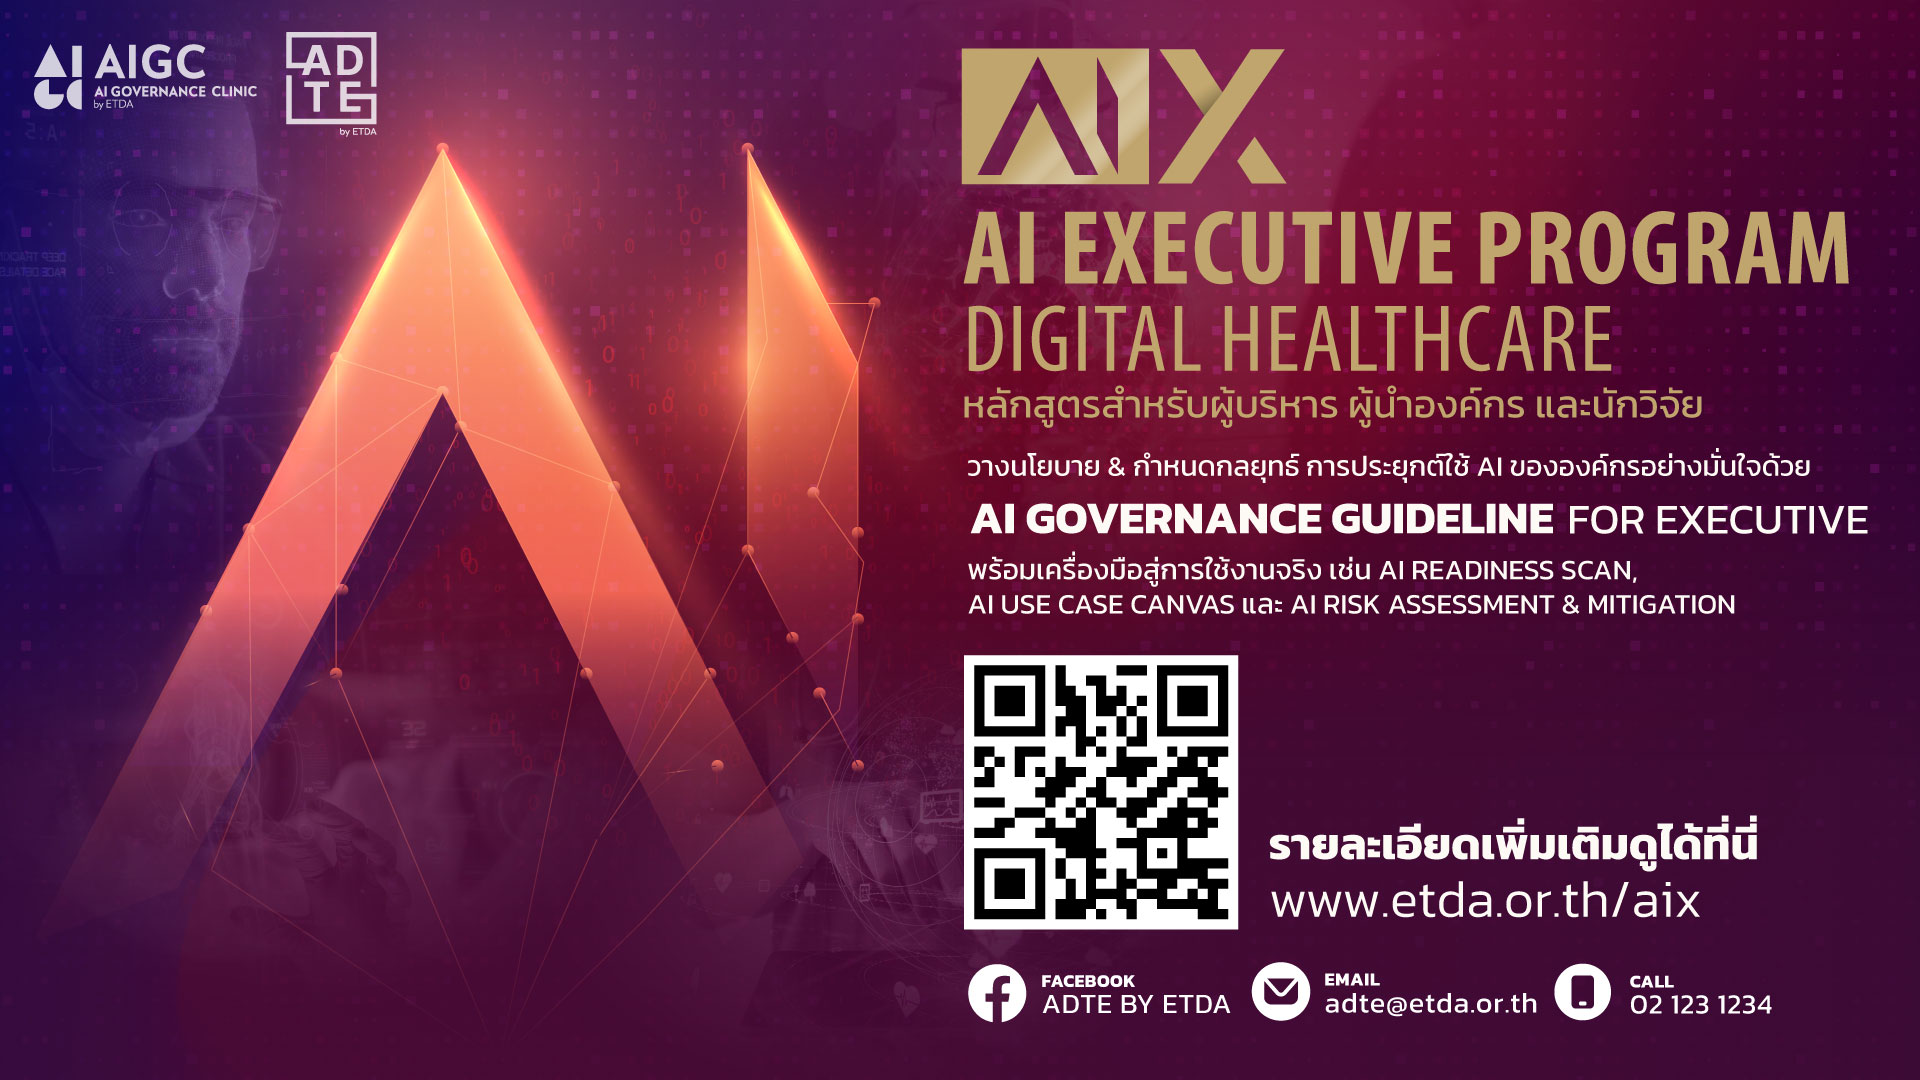 AI Executive Program (AiX) Digital Healthcare